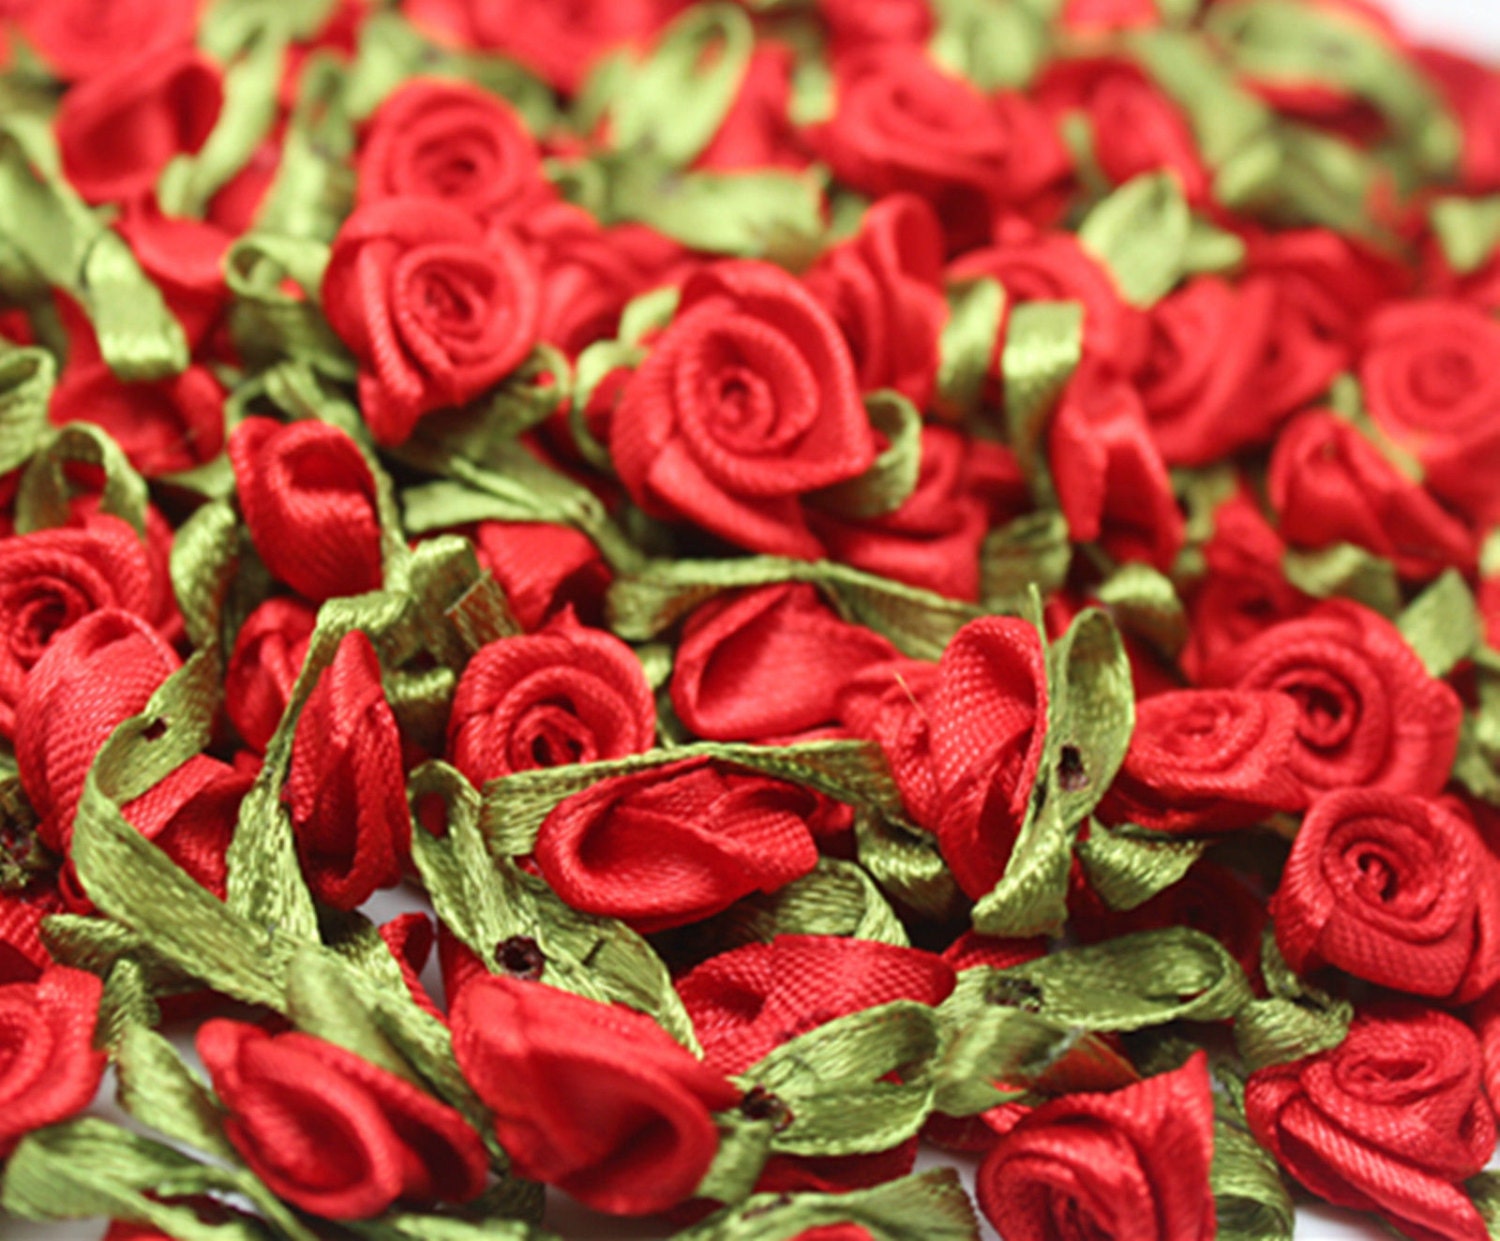 Silk Ribbon Roses. Flower Box. Satin Roses. Eternity Rose